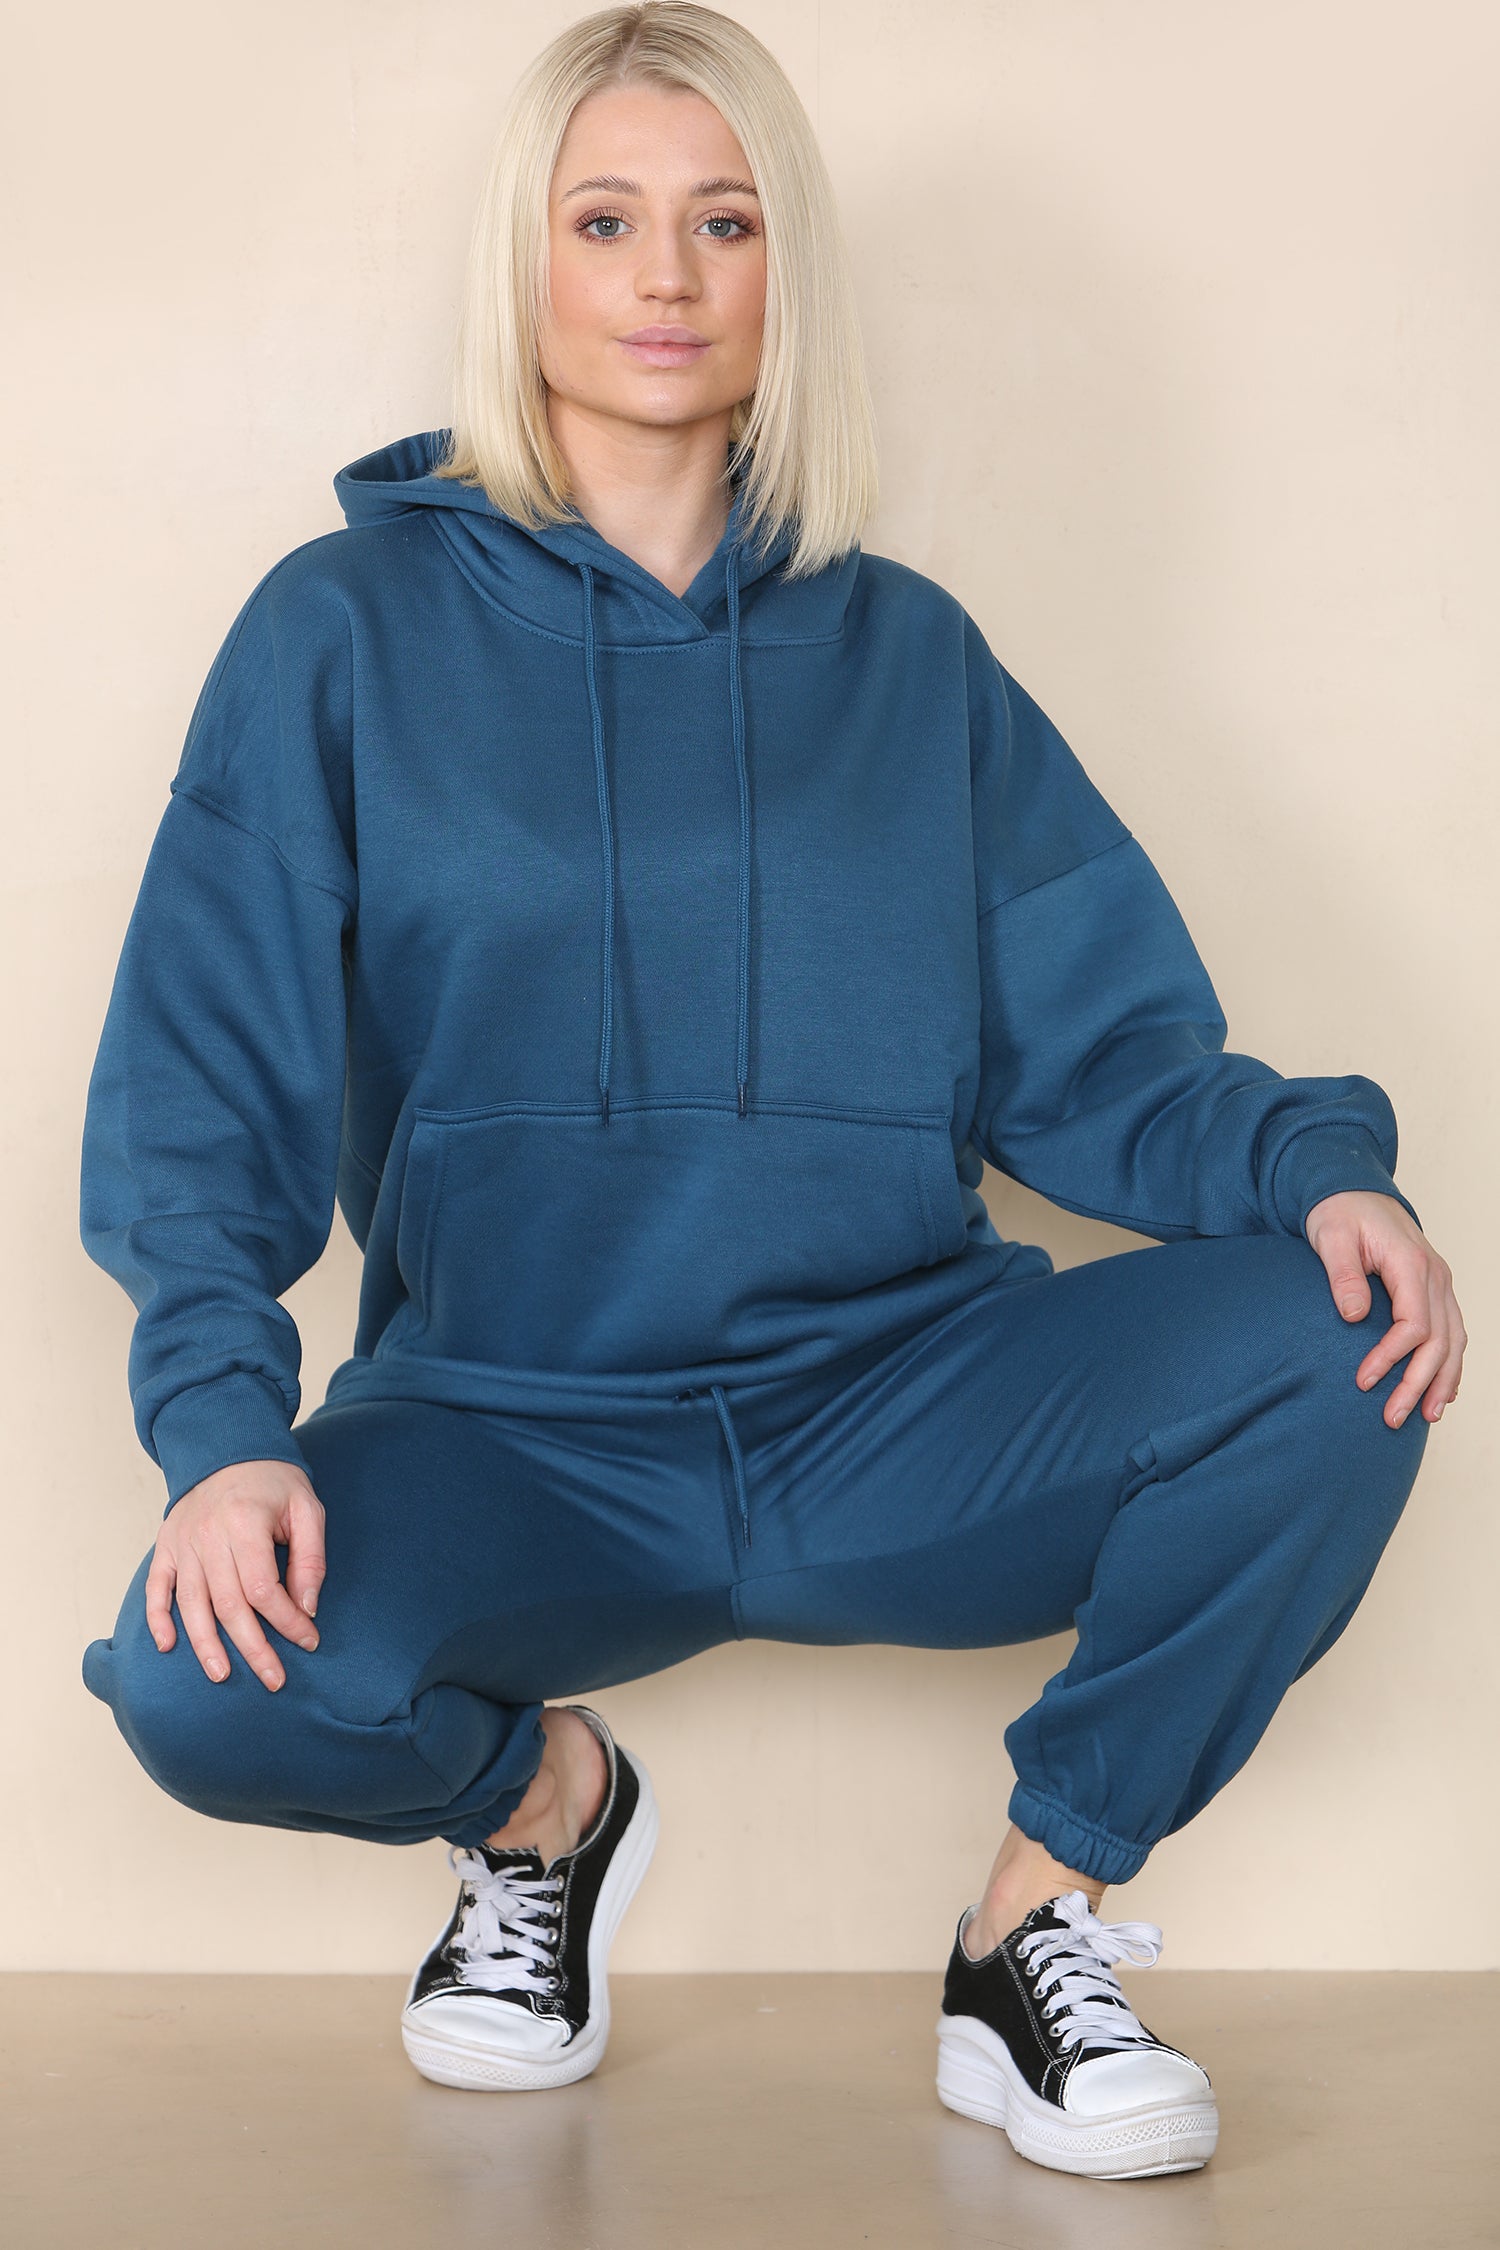 Teal Blue Hooded Oversize & Jogger Loungewear Set - Flora - Storm Desire